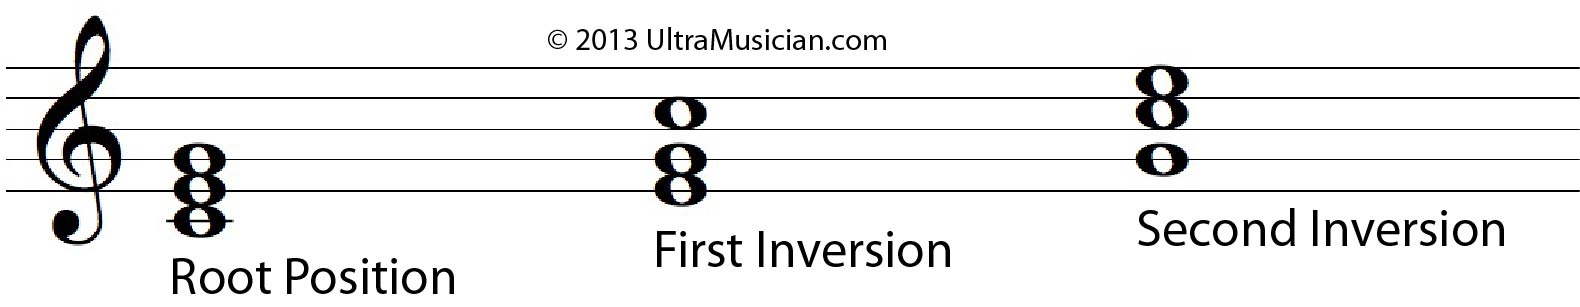 Inversions | UltraMusician.com